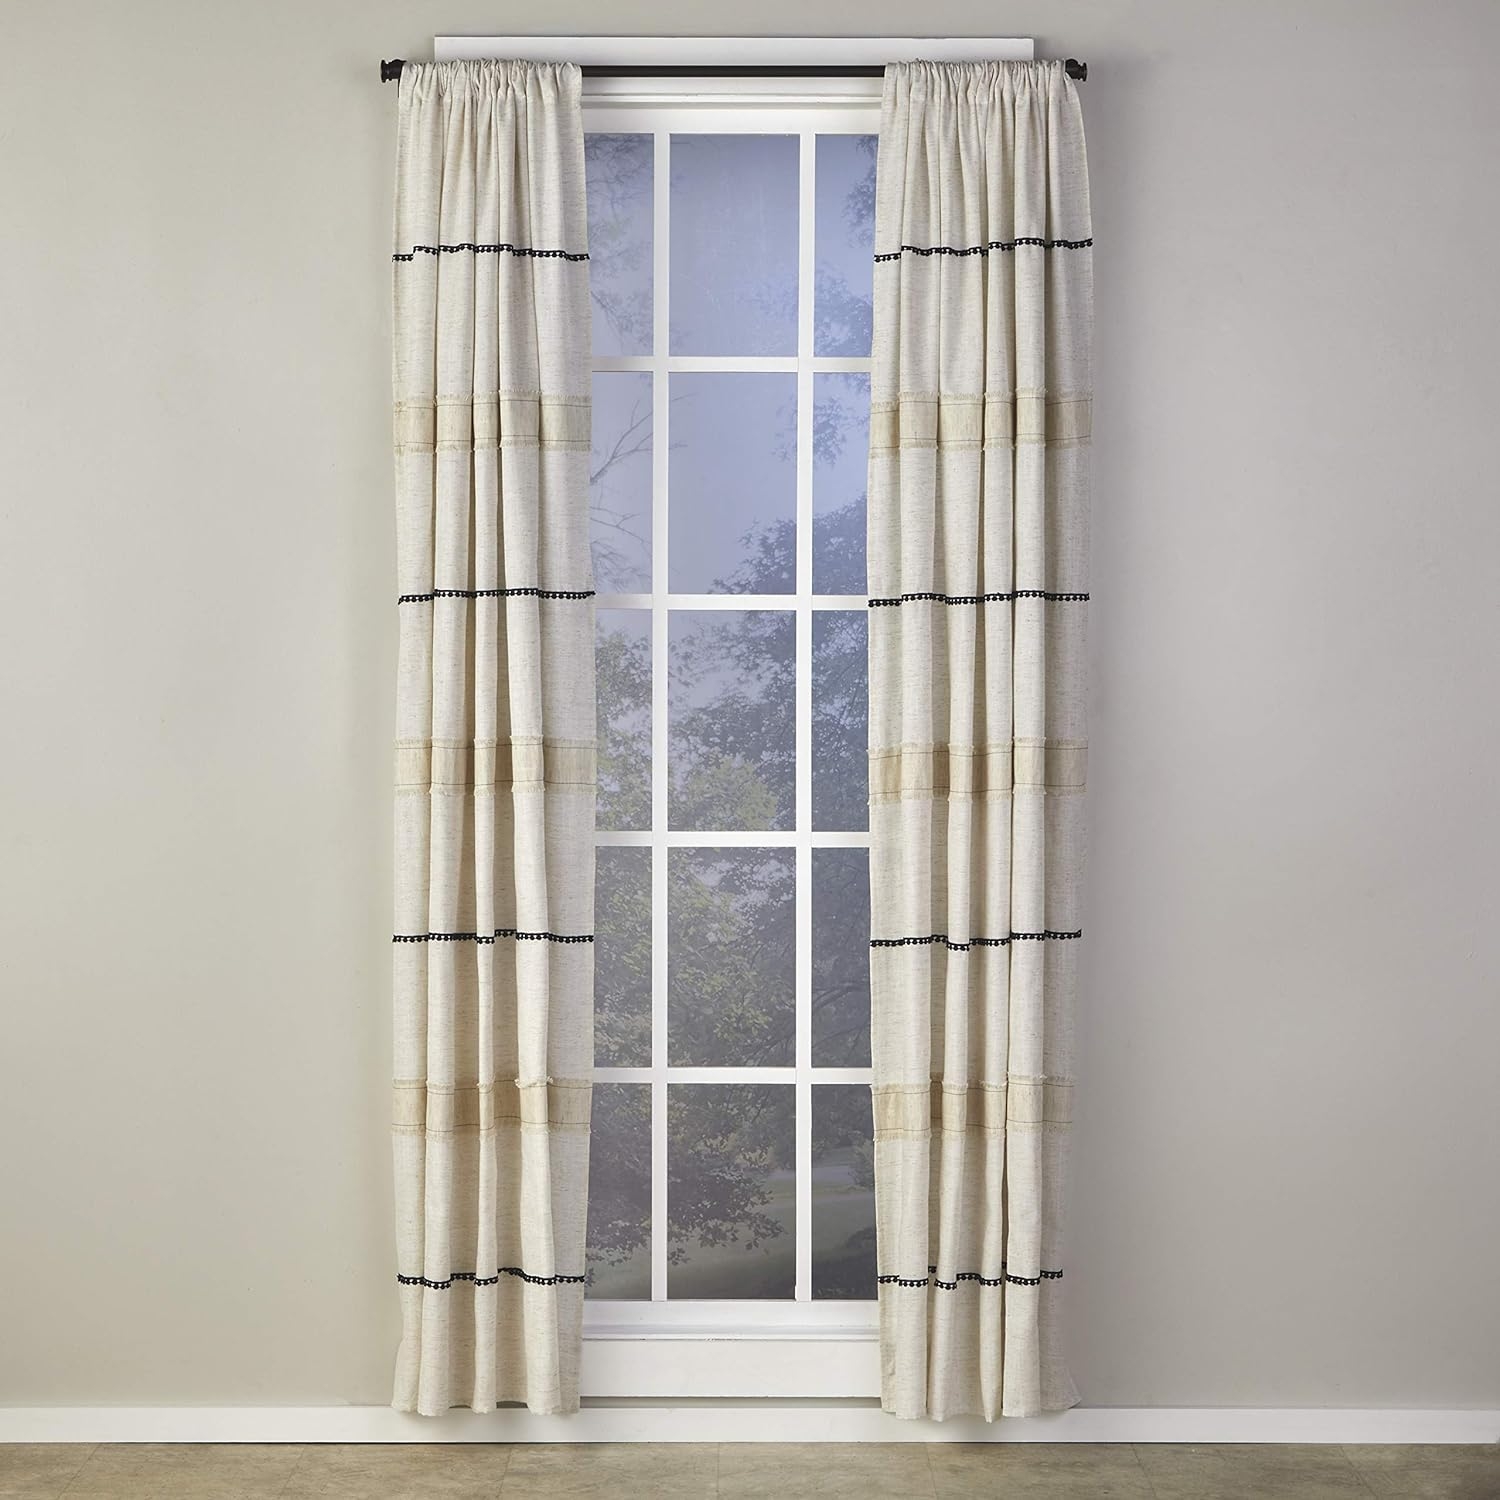 SKL Home Frayser Curtain Panel Pair, 52x63, Linen